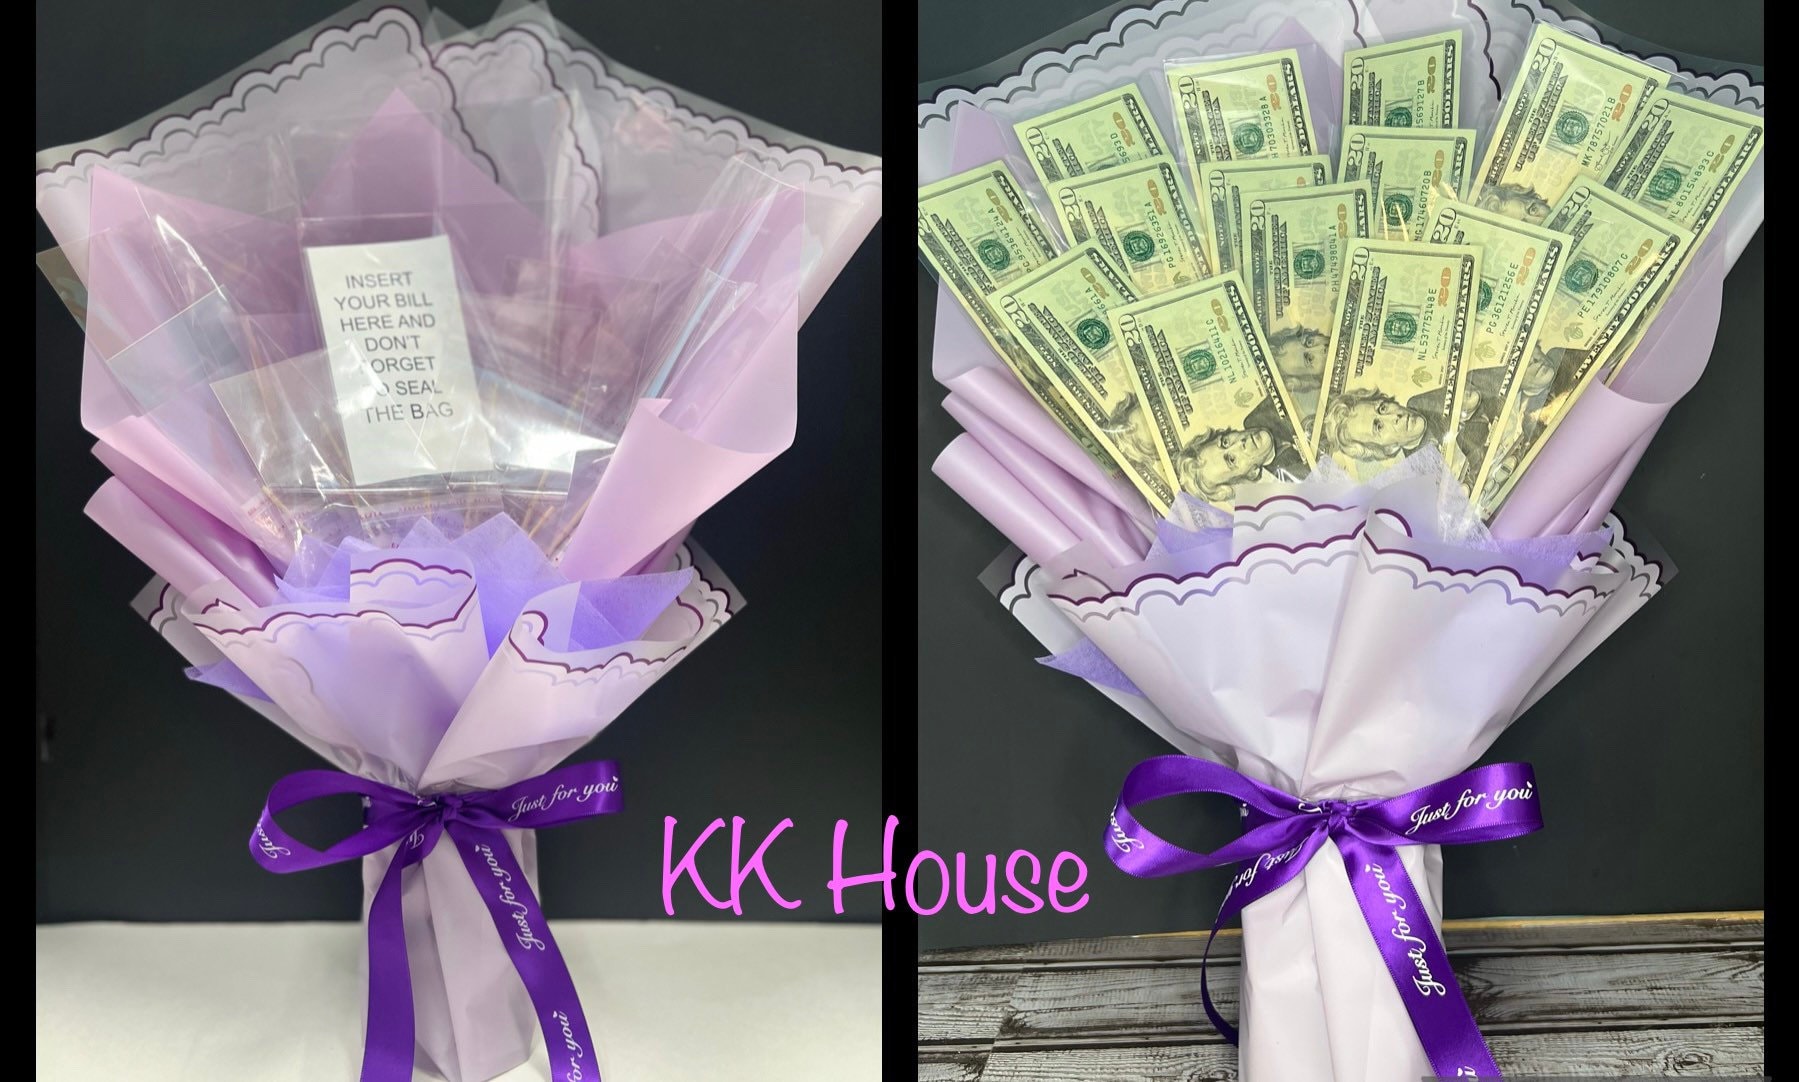 Easy to make Money Bouquet 💐 #flowerarrangement #giftidea #diy #cash , How To Wrap A Flower Bouquet